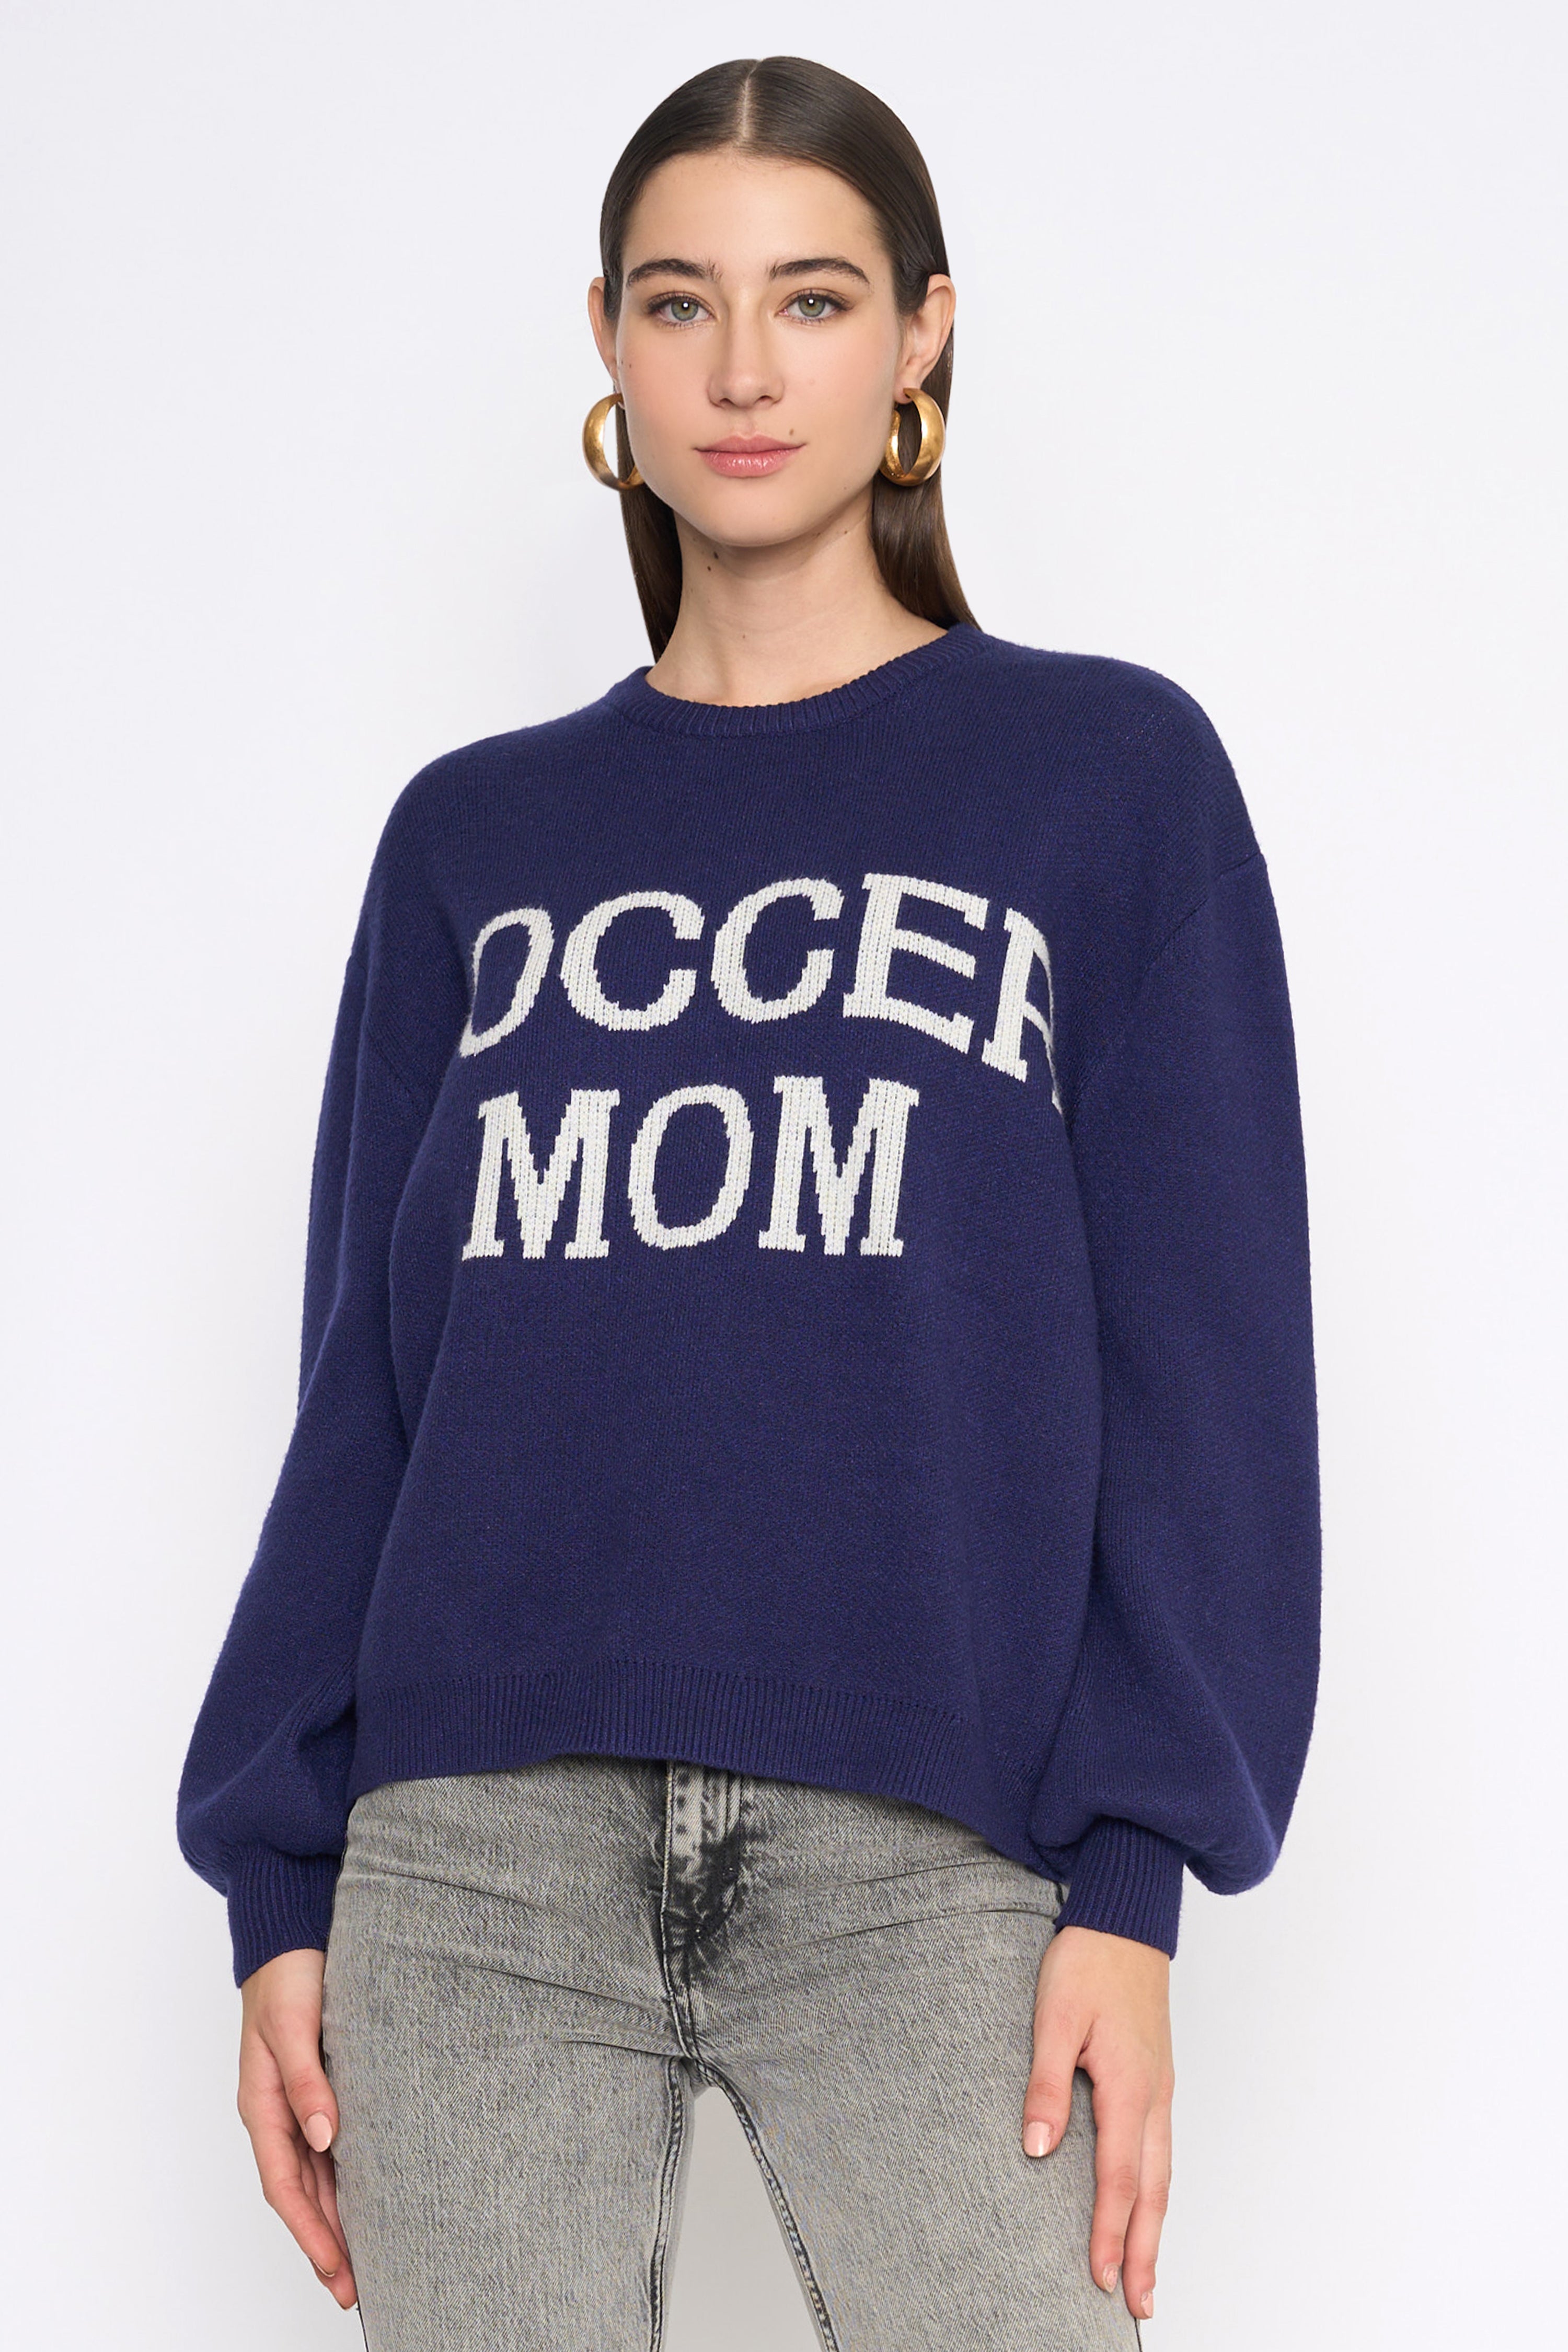 Soccer Mom Sweater